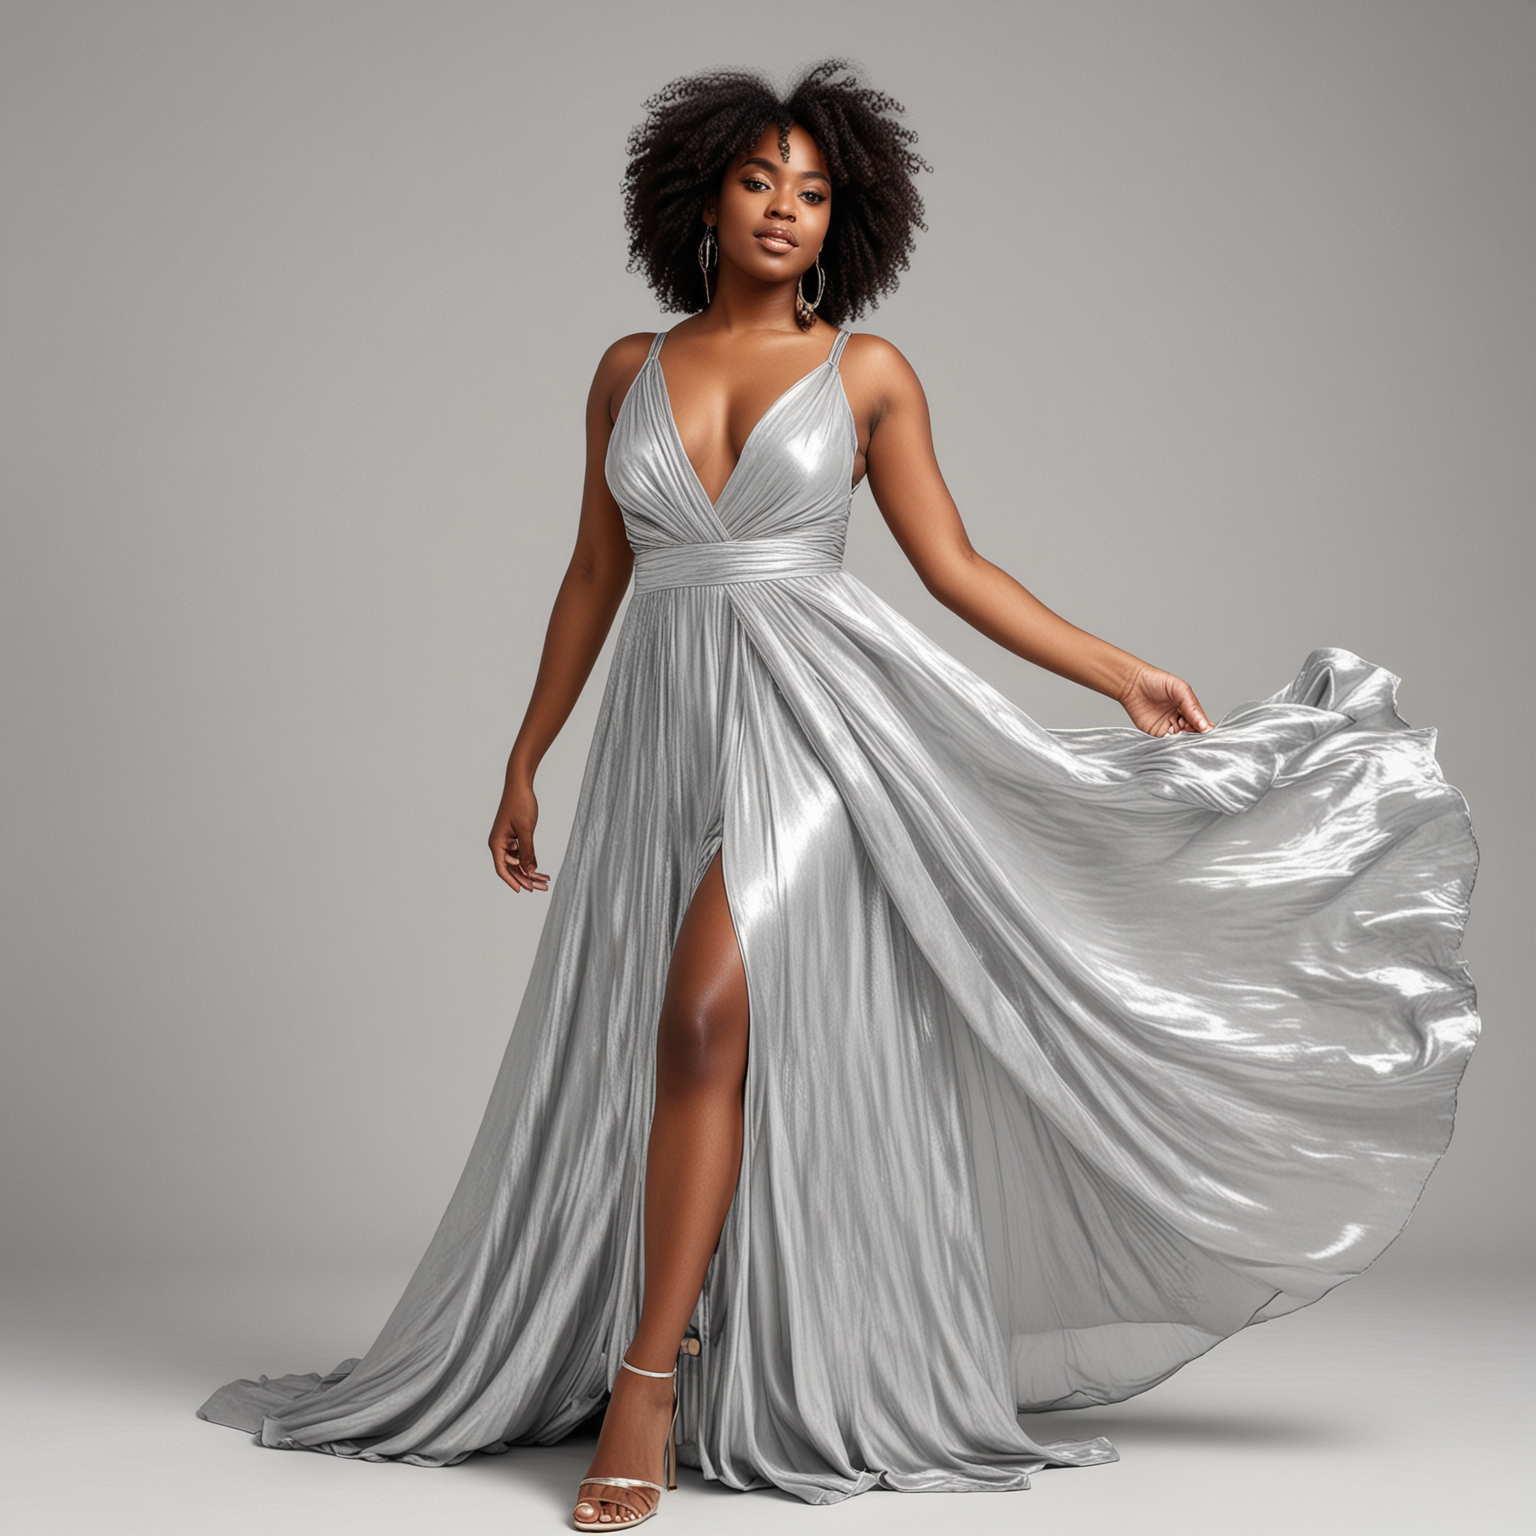 Elegant Black Woman in Silver Flowy Dress